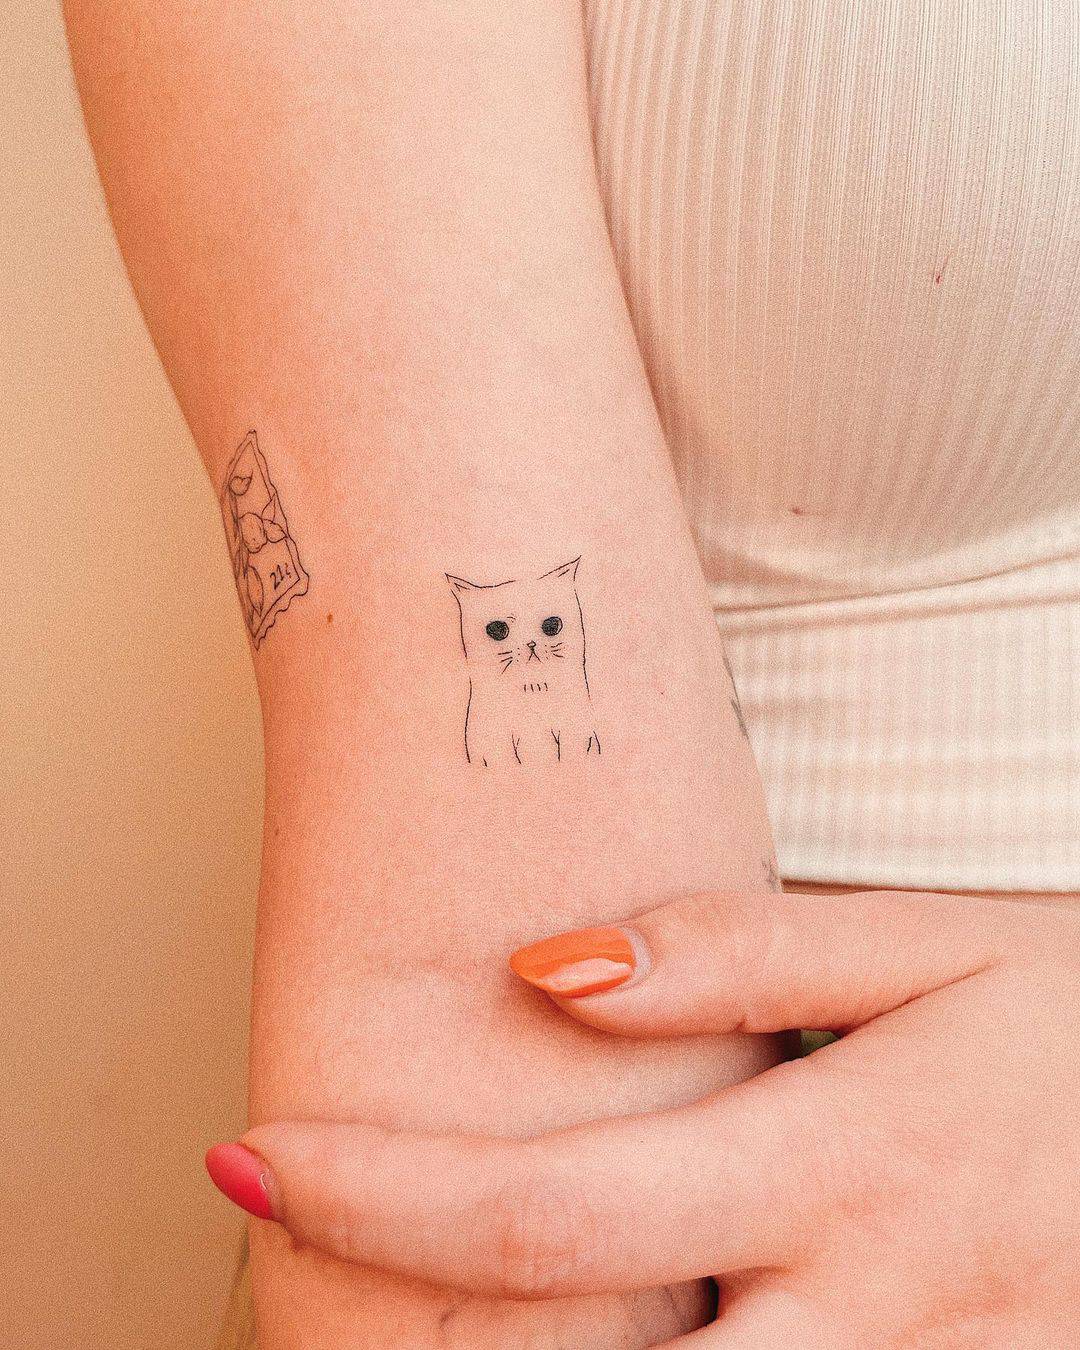 Cute cat tattoo design by batuhanyorukart